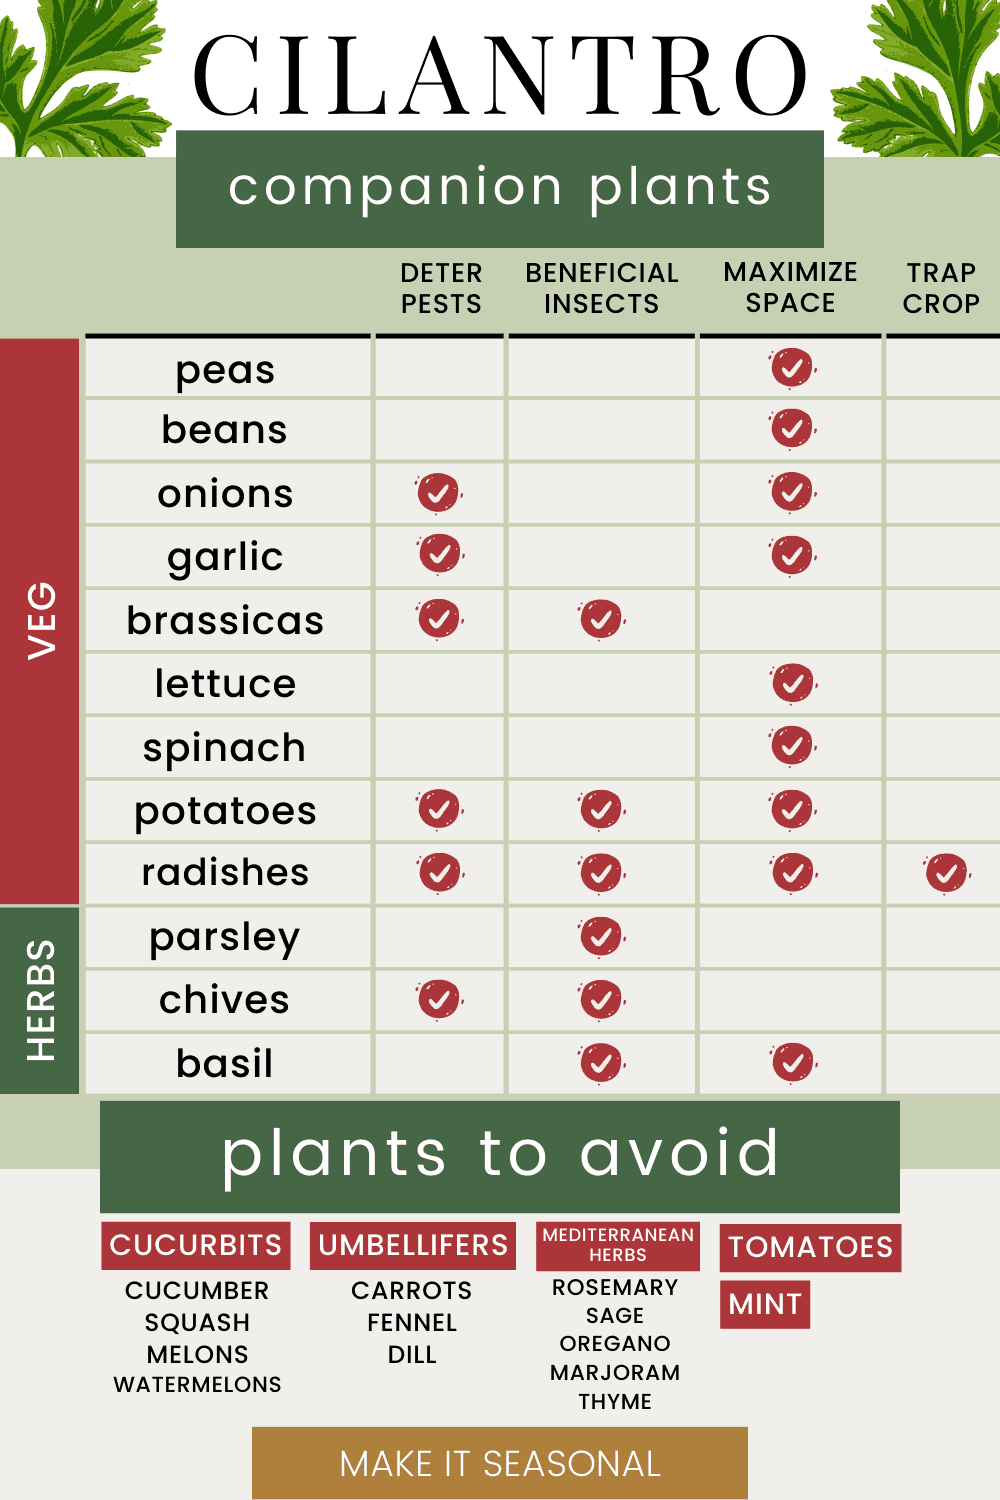 Cilantro Companion Plants: The Best Plants to Grow with Cilantro